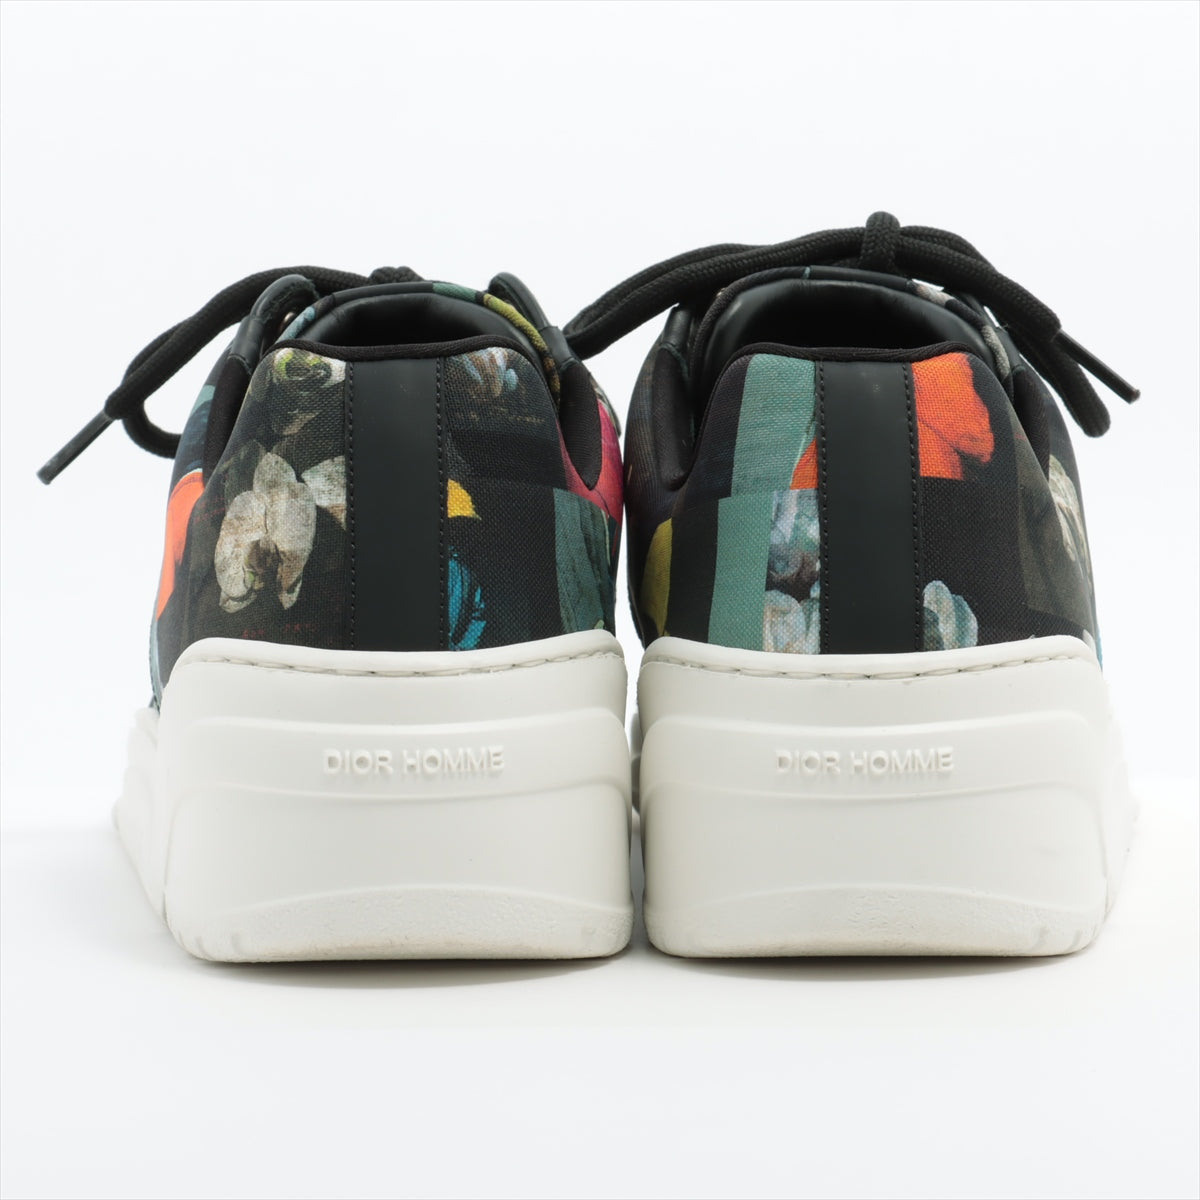 DIOR HOMME B-1 Analog-digital Fabric Sneakers 40 Men's Multicolor B17